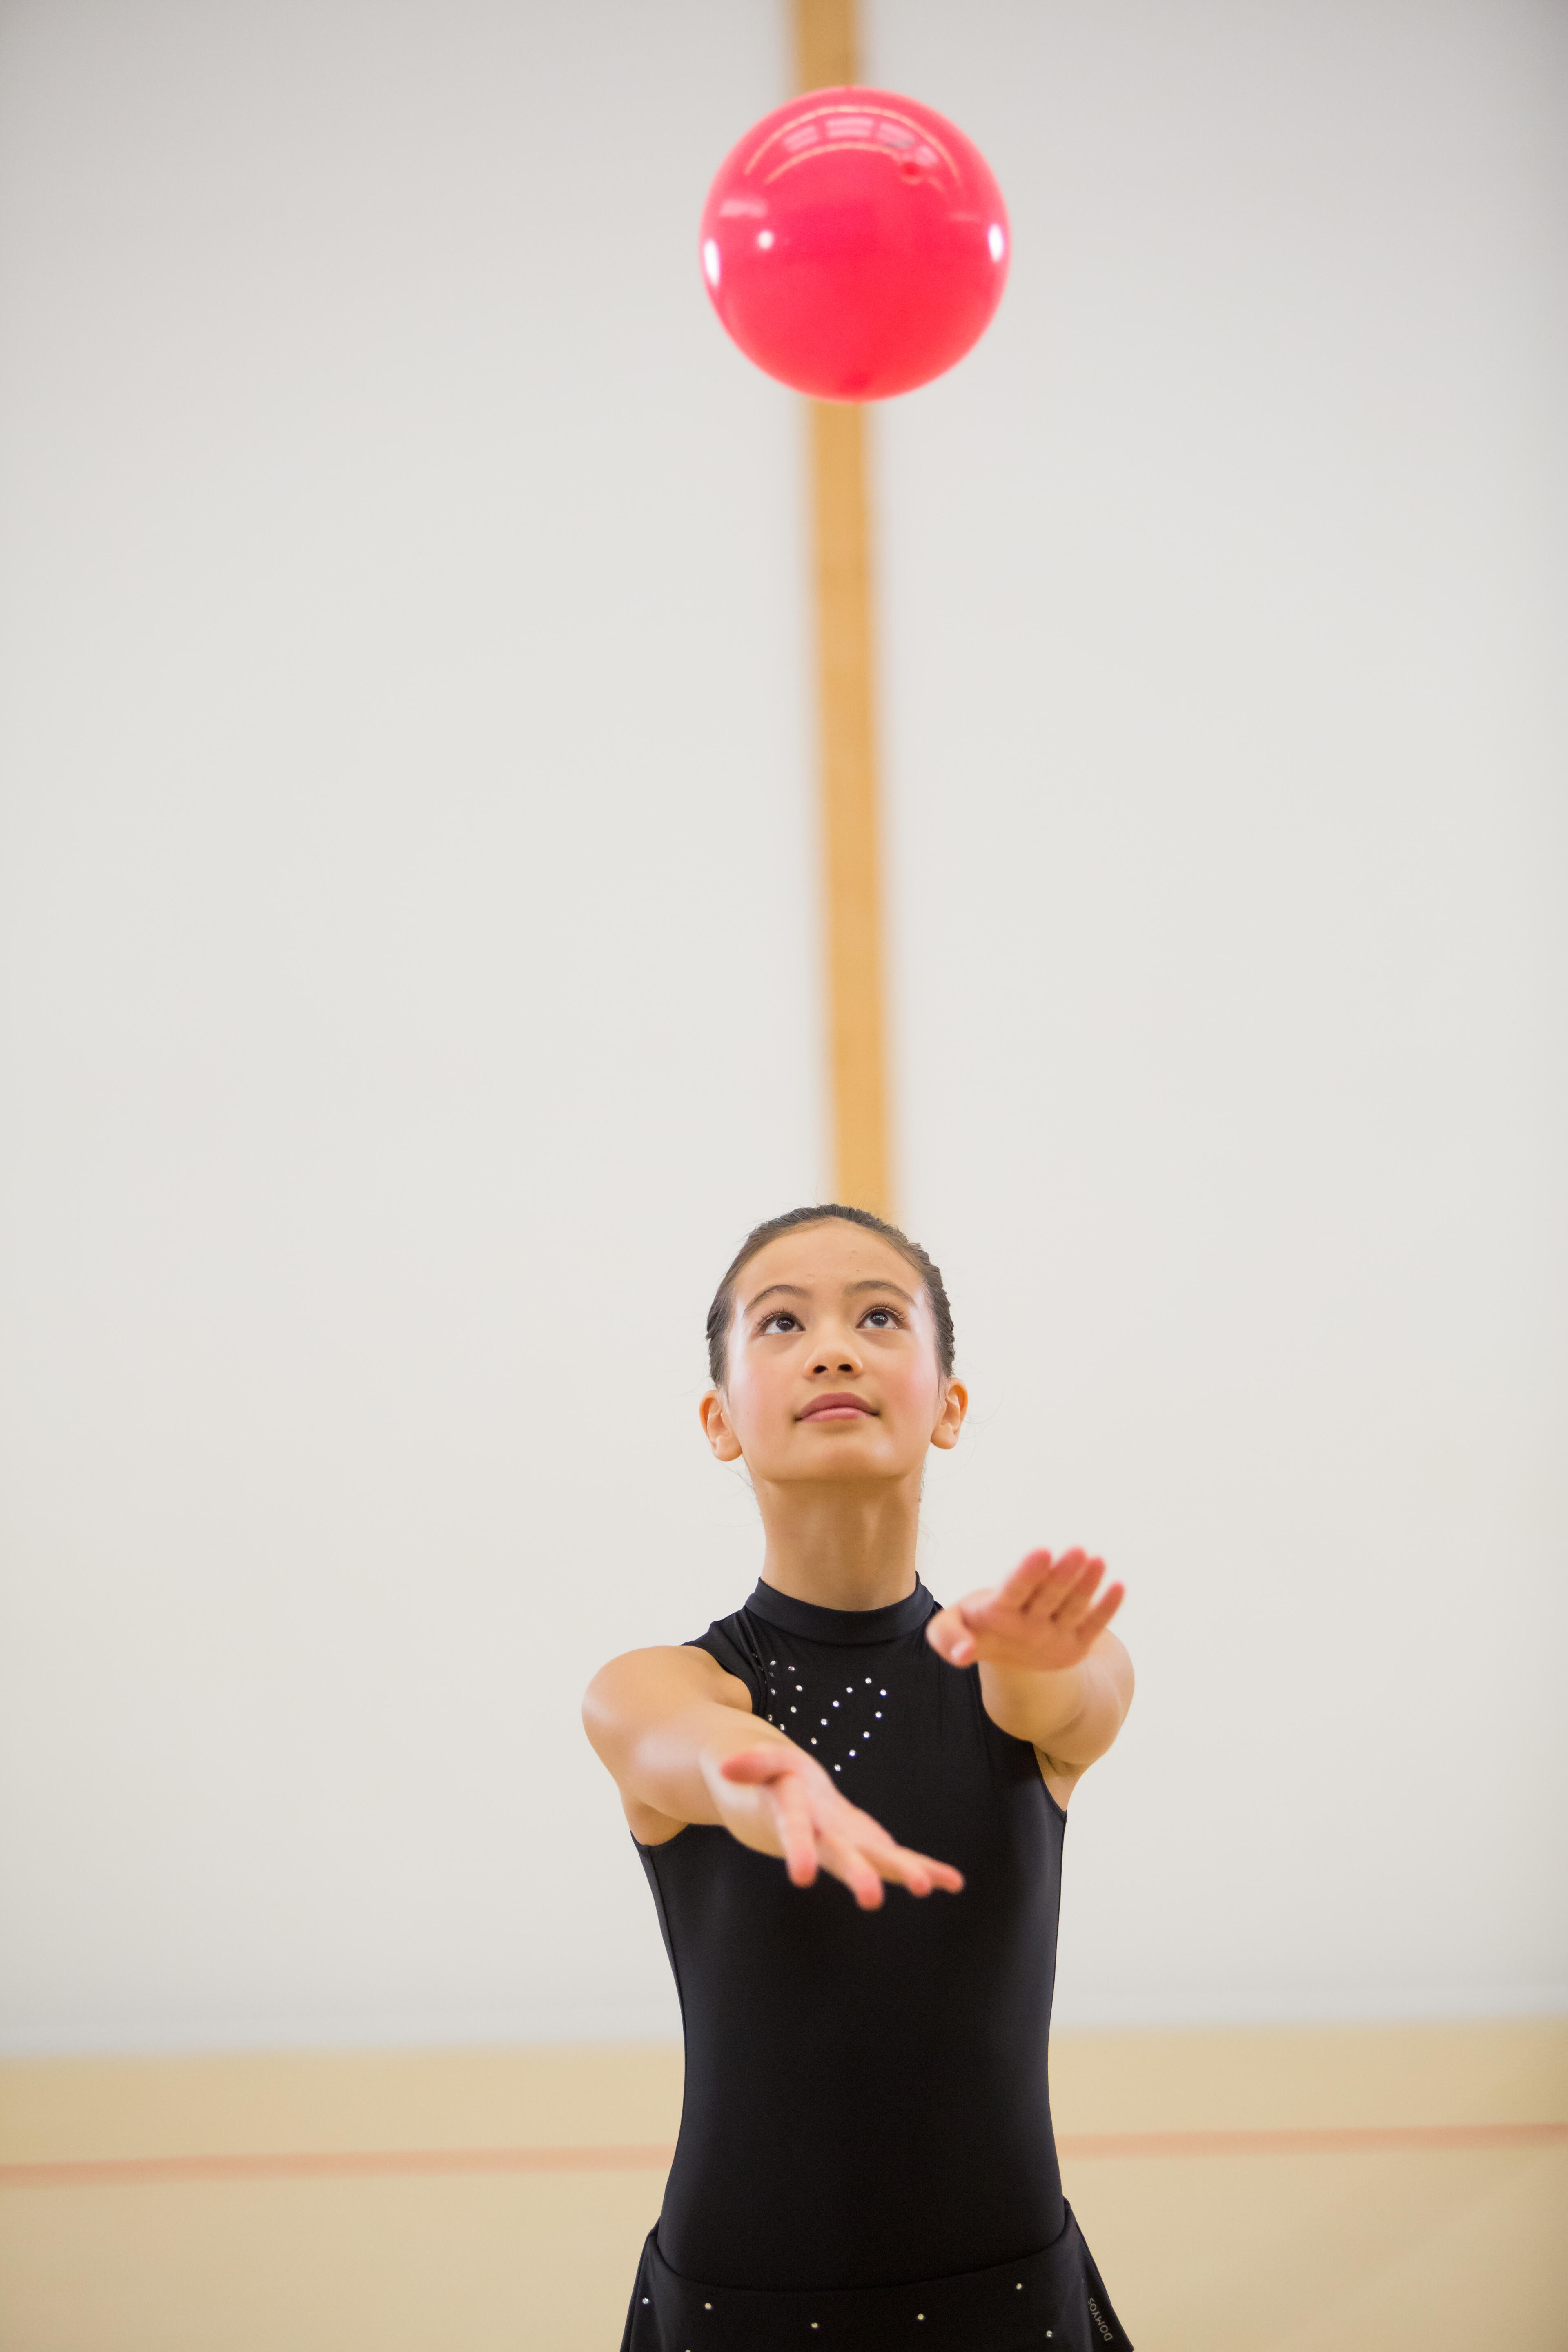 Ballon de gymnastique rythmique 16,5 cm – rose - DOMYOS